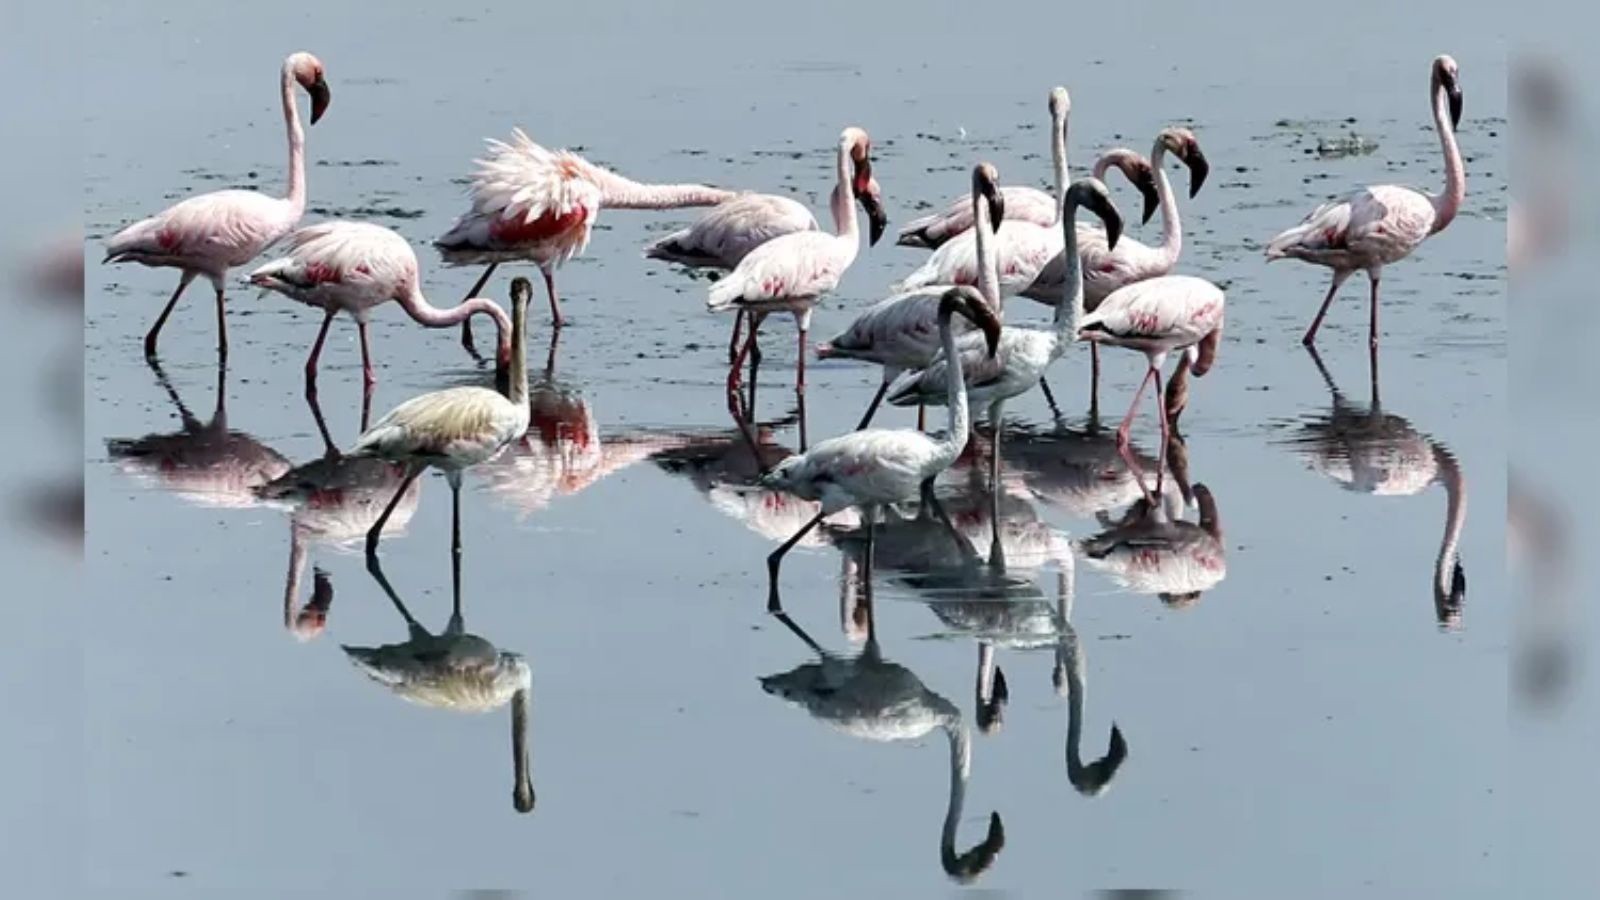 Visitors flying drones pose major threat to flamingos at wetlands in Navi Mumbai